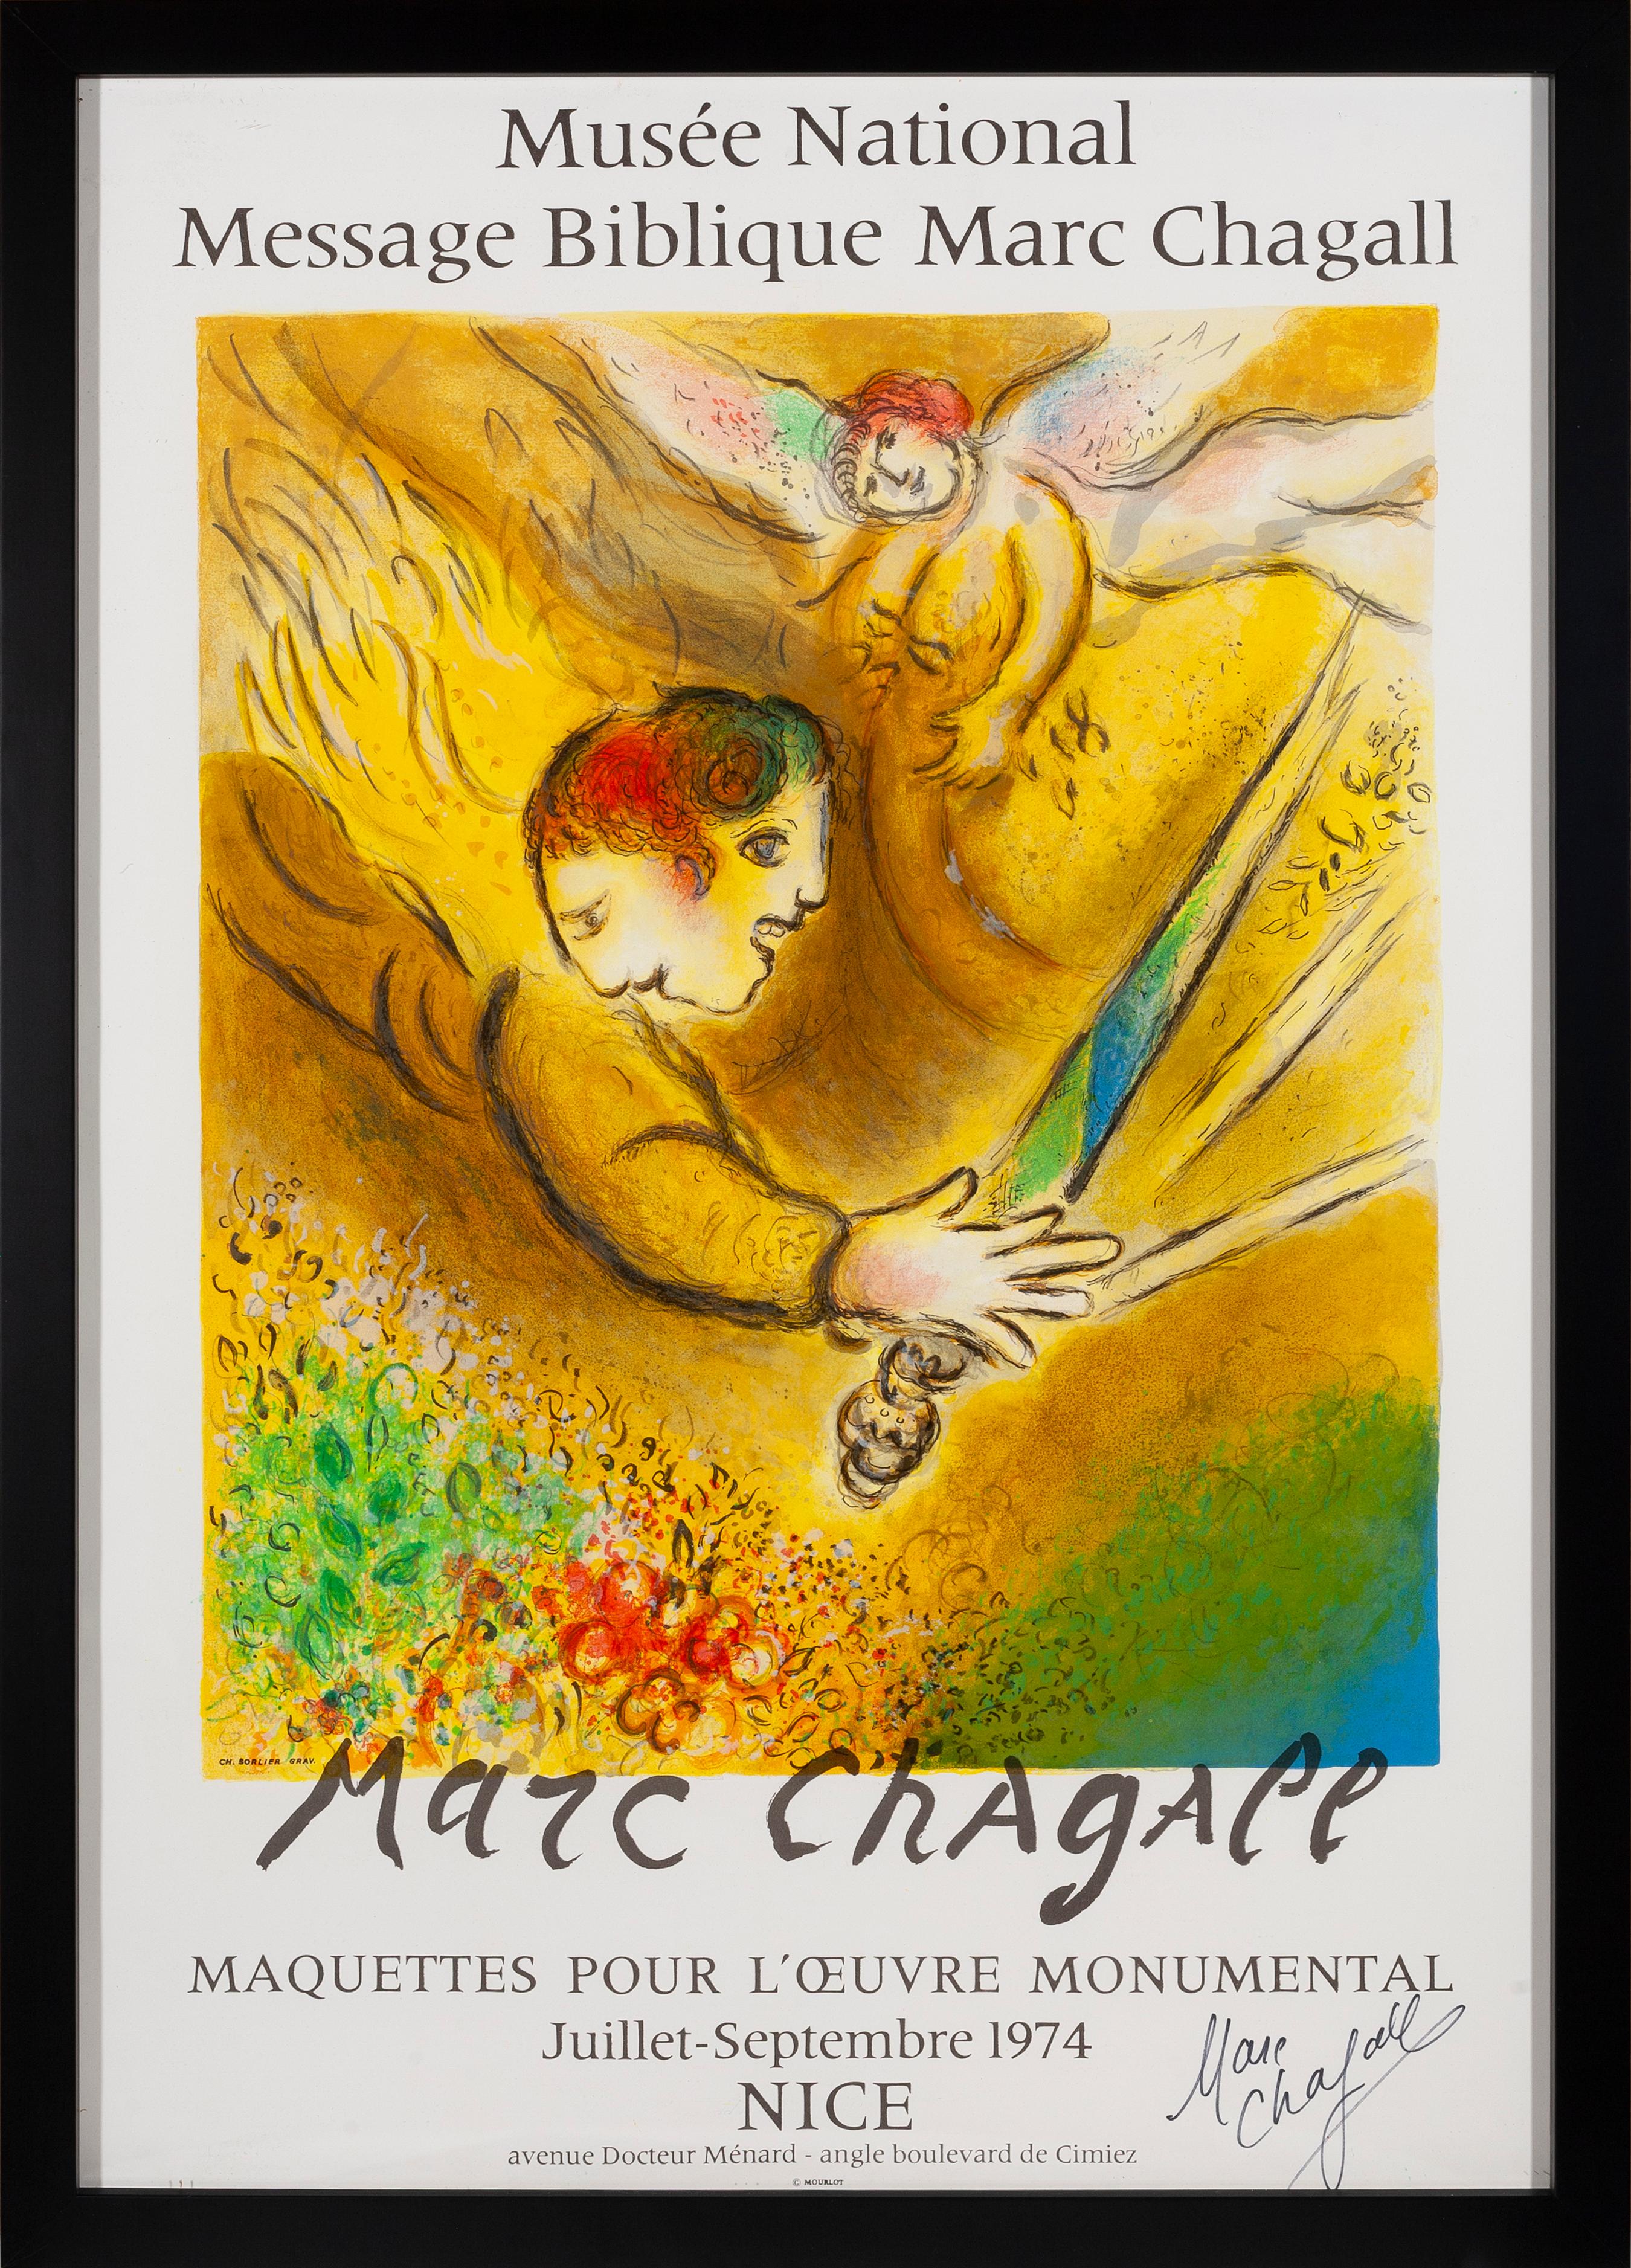 Figurative Print Marc Chagall - Messagerie Biblique